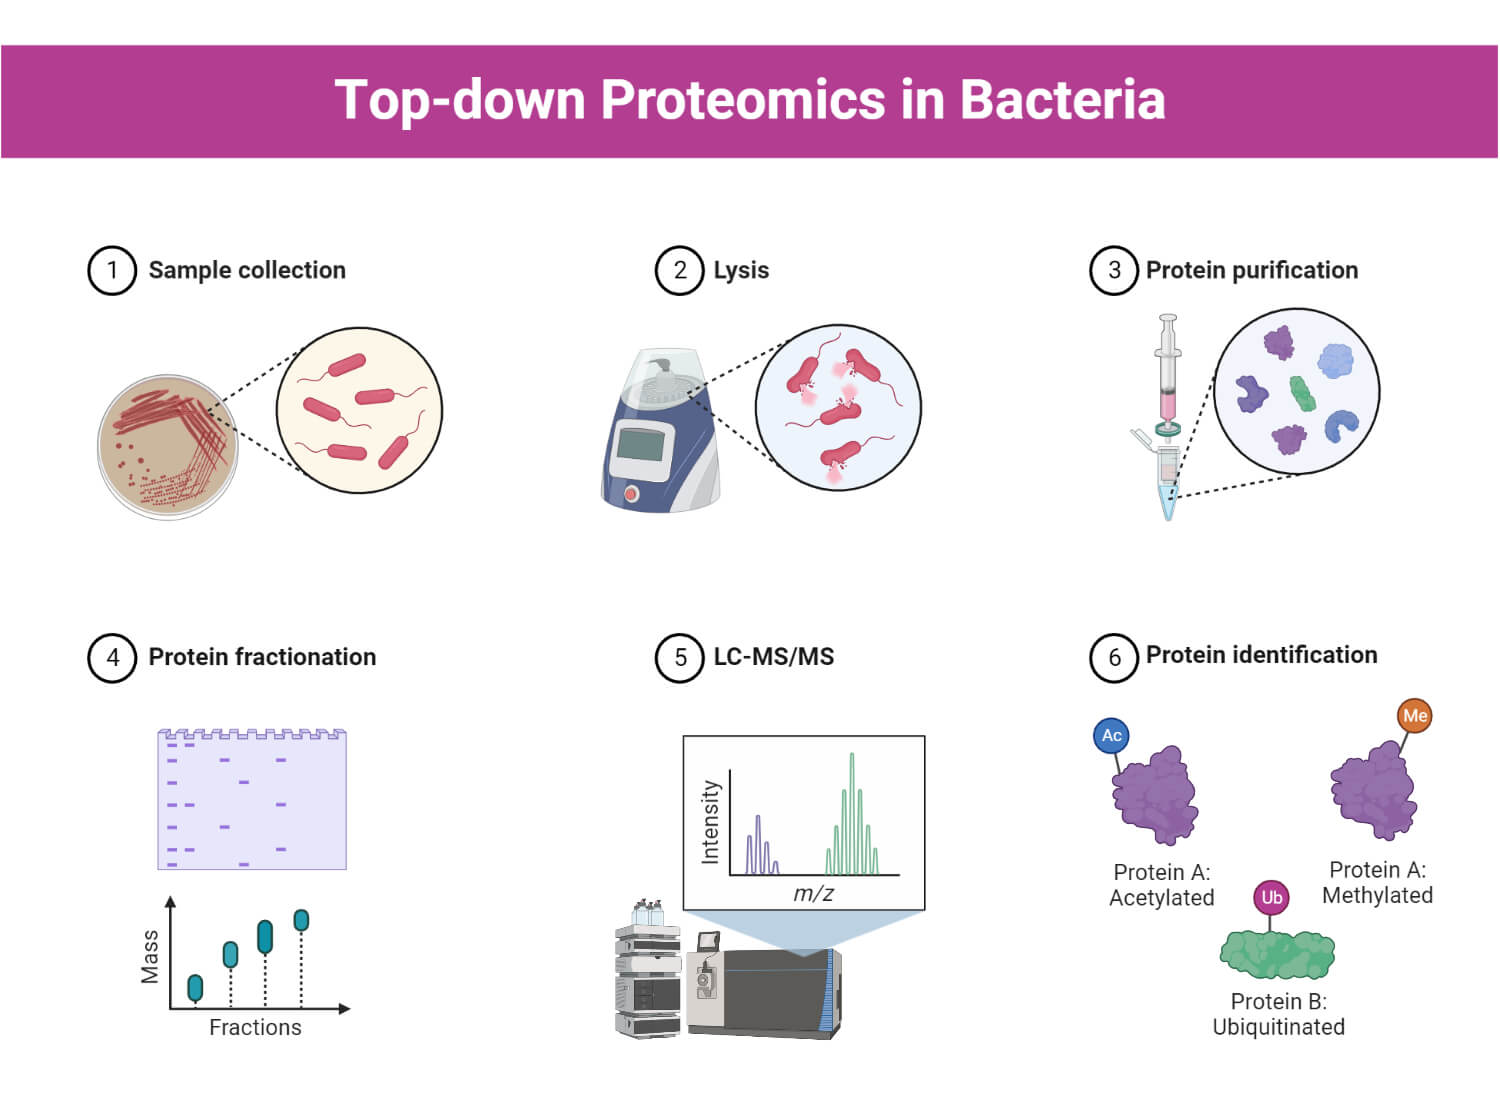 Top-down Proteomics of Bacteria